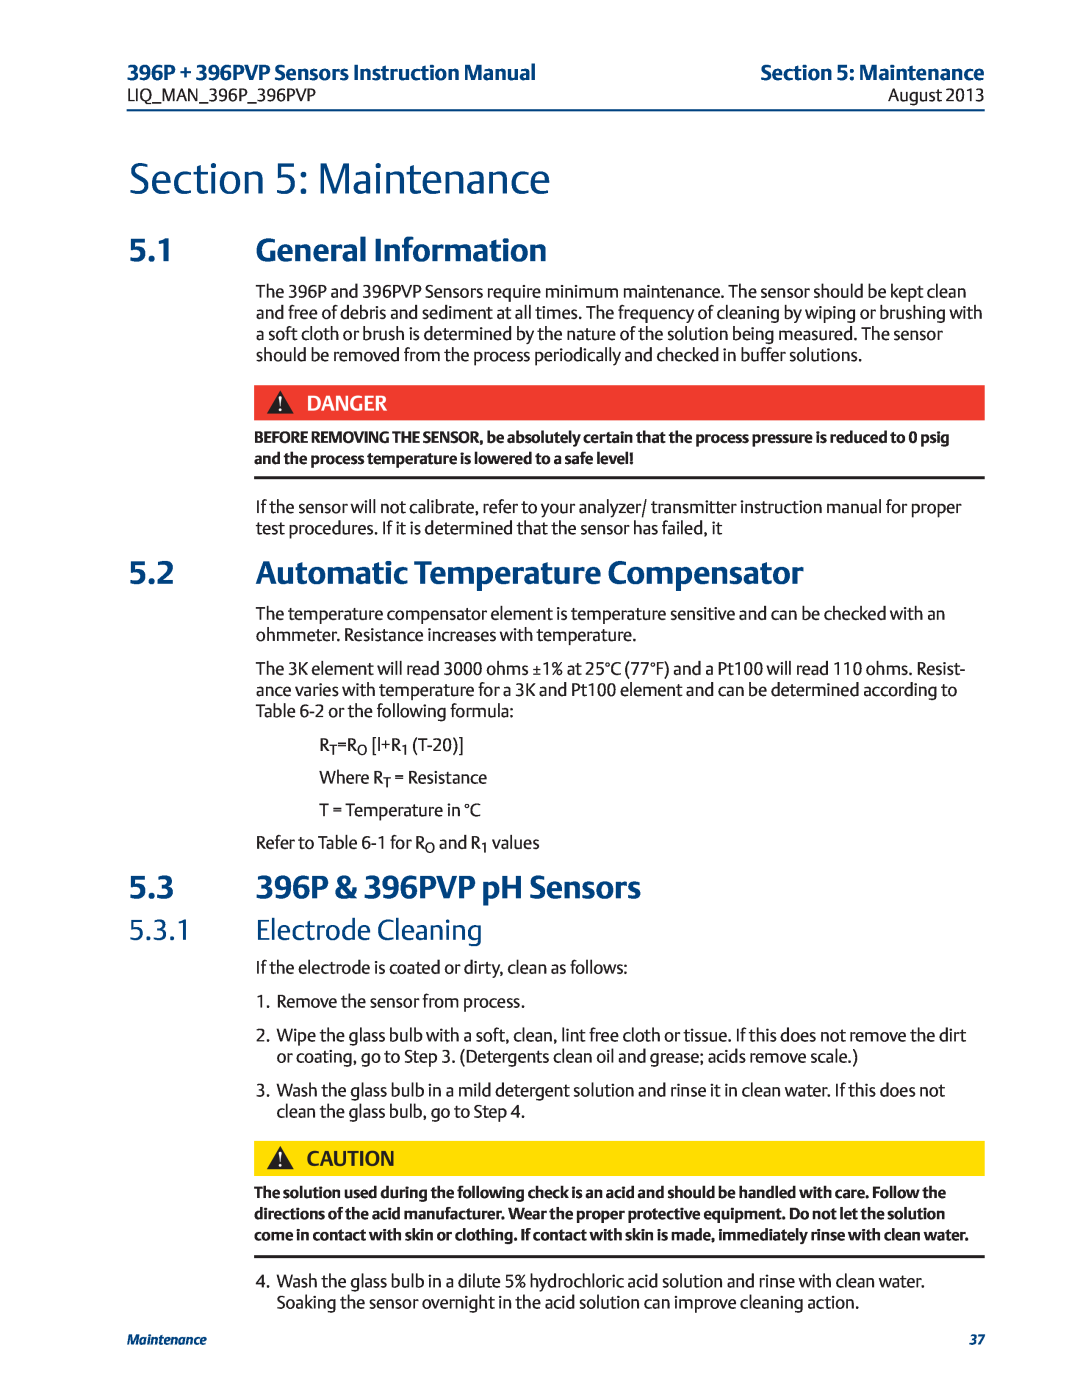 Emerson Maintenance, 5.1General Information, 5.2Automatic Temperature Compensator, 5.3396P & 396PVP pH Sensors, Danger 